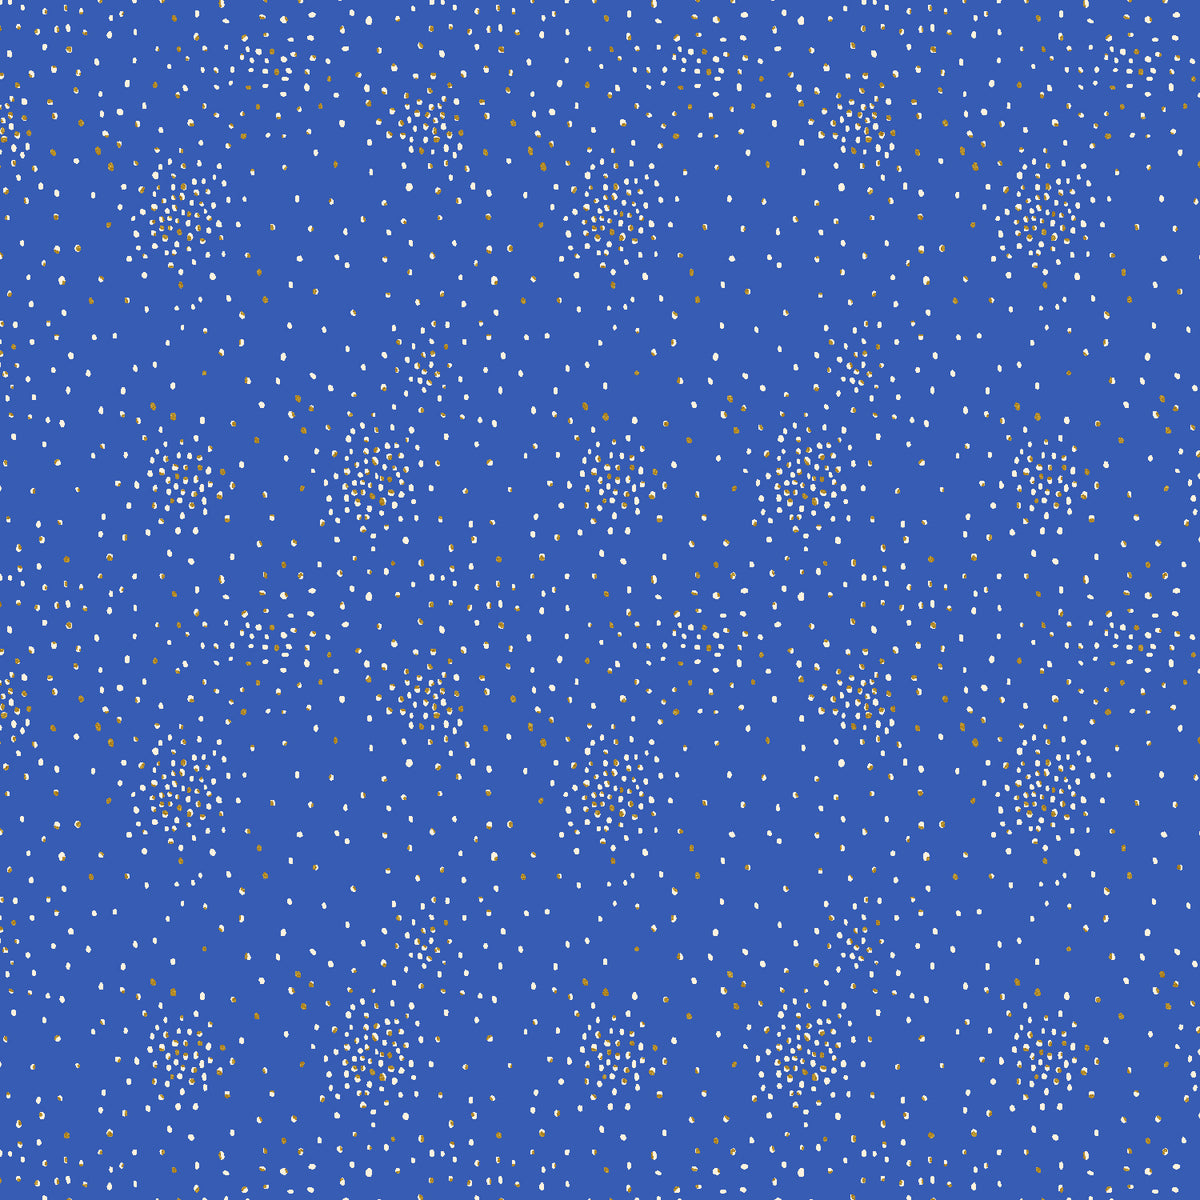 Clusters Quilt Fabric by Cotton+Steel - Deep Ocean Metallic (Blue) - CS107-DO12M